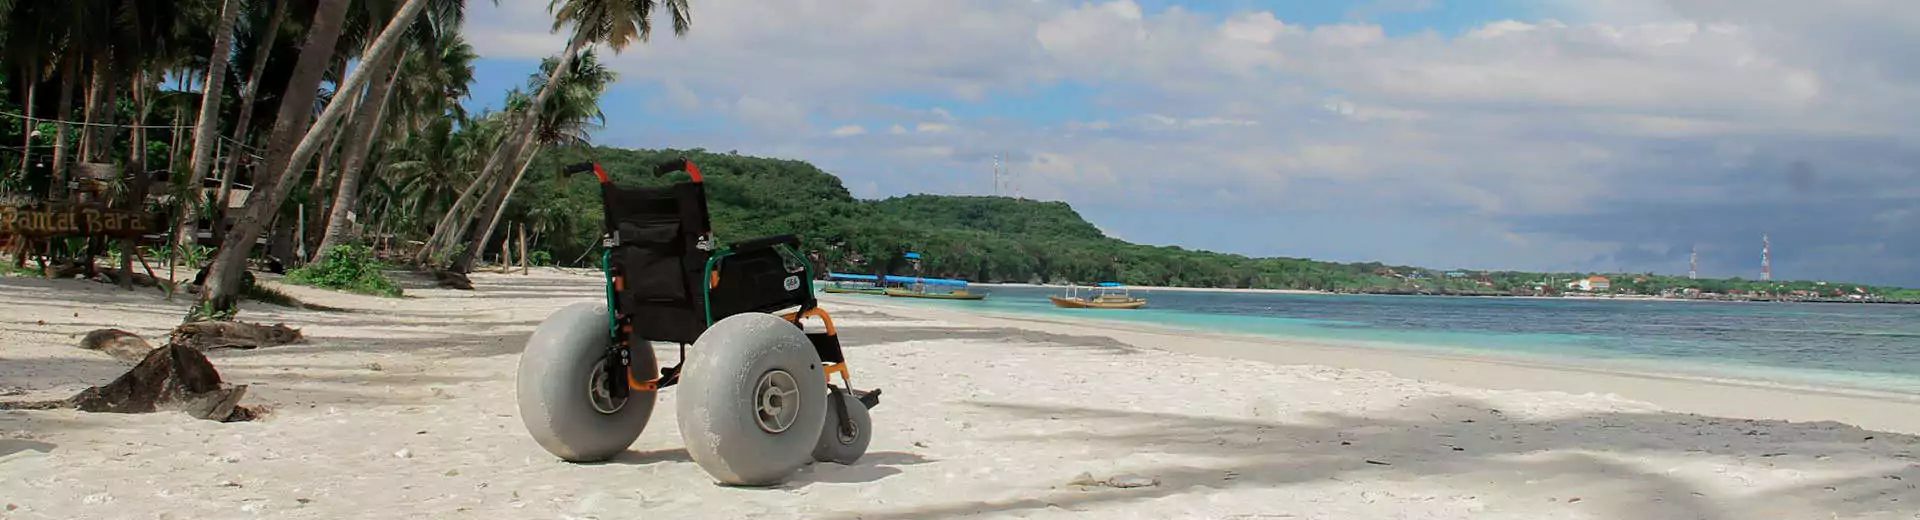 Rollstuhlreisen Sulawesi Rollstuhl am Strand Palmen